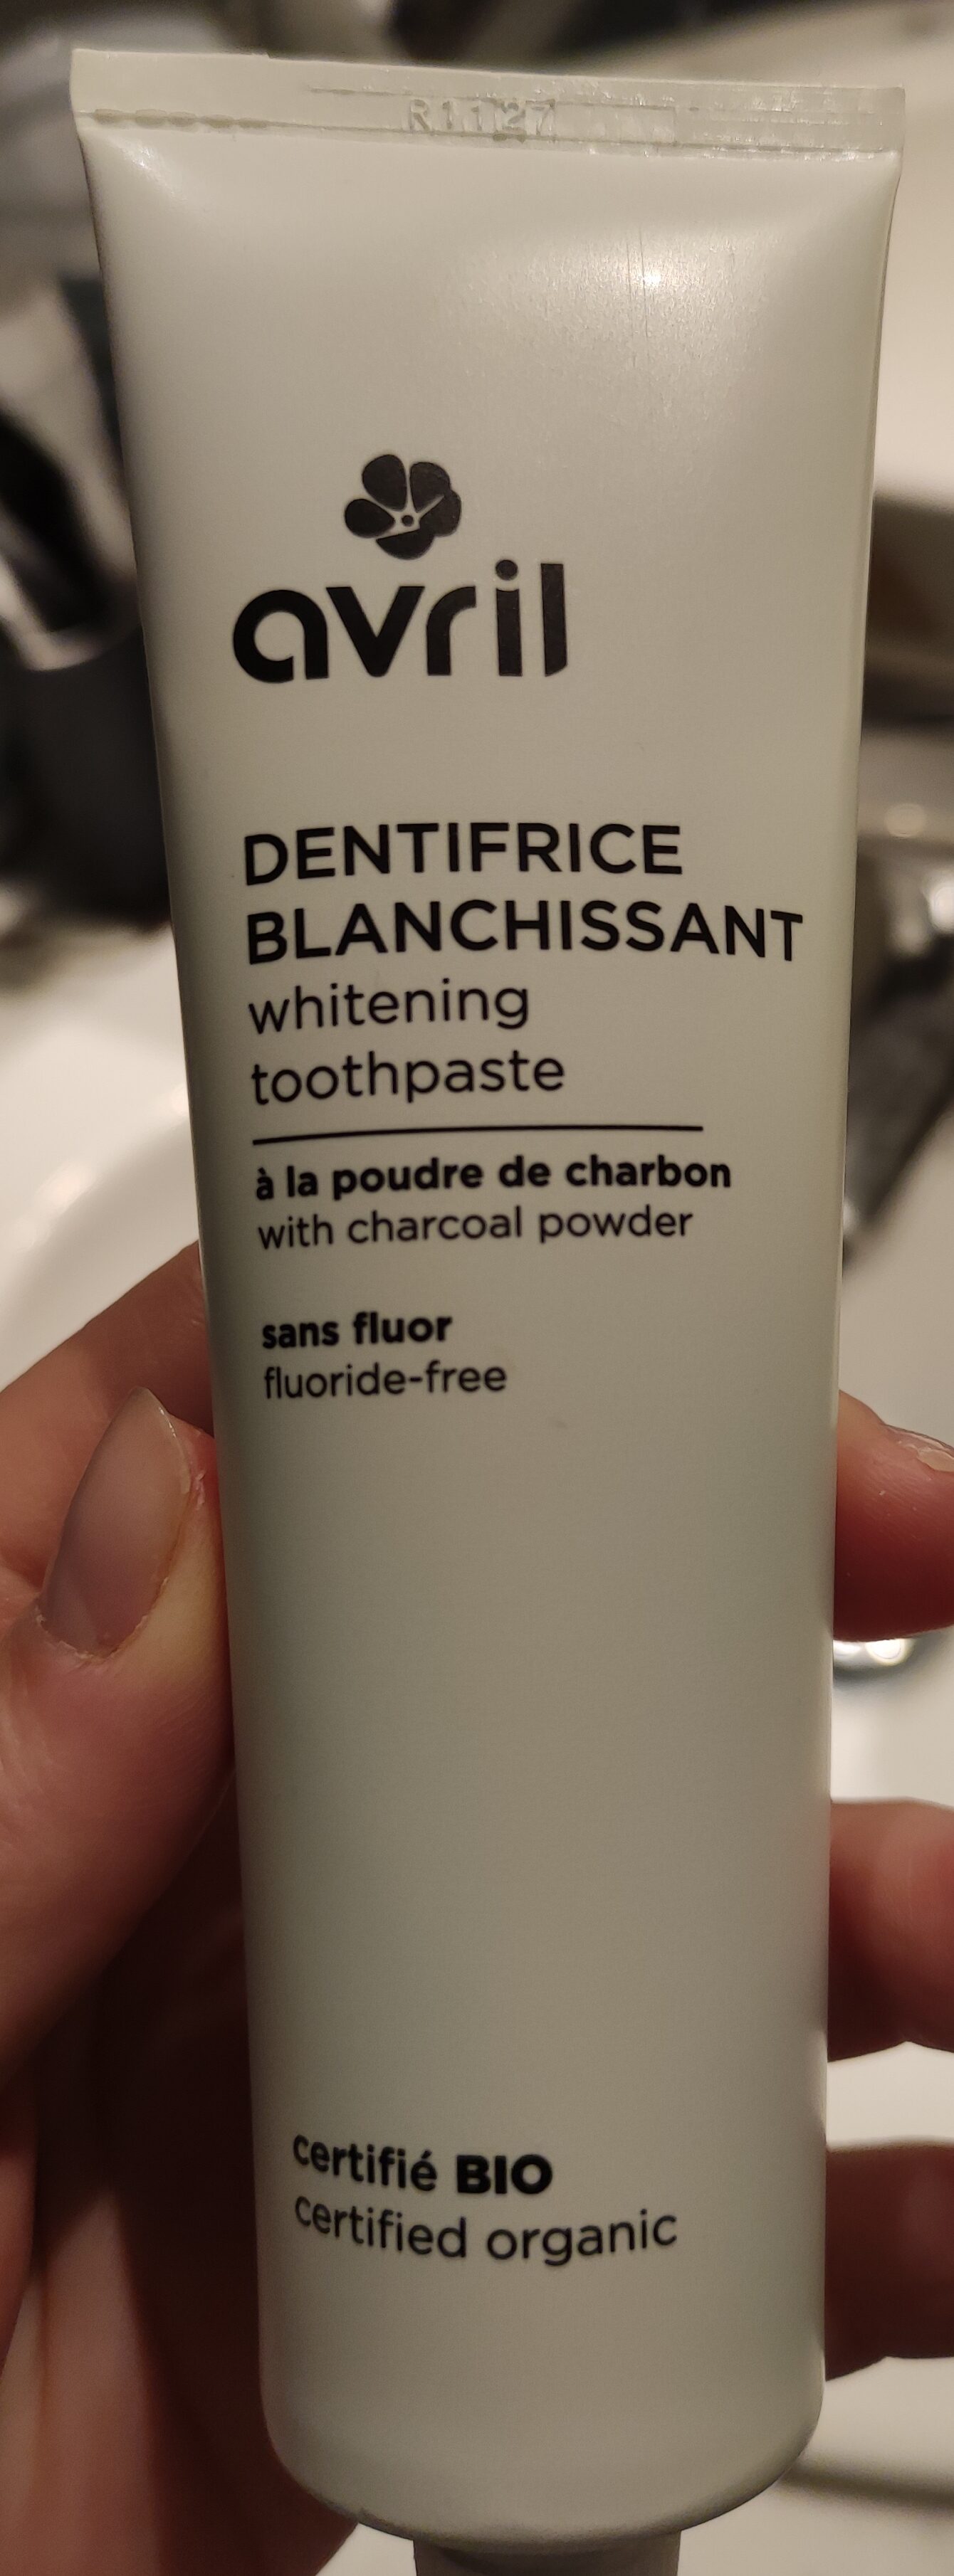 Avril dentifrice blanchissant - Produktas - fr